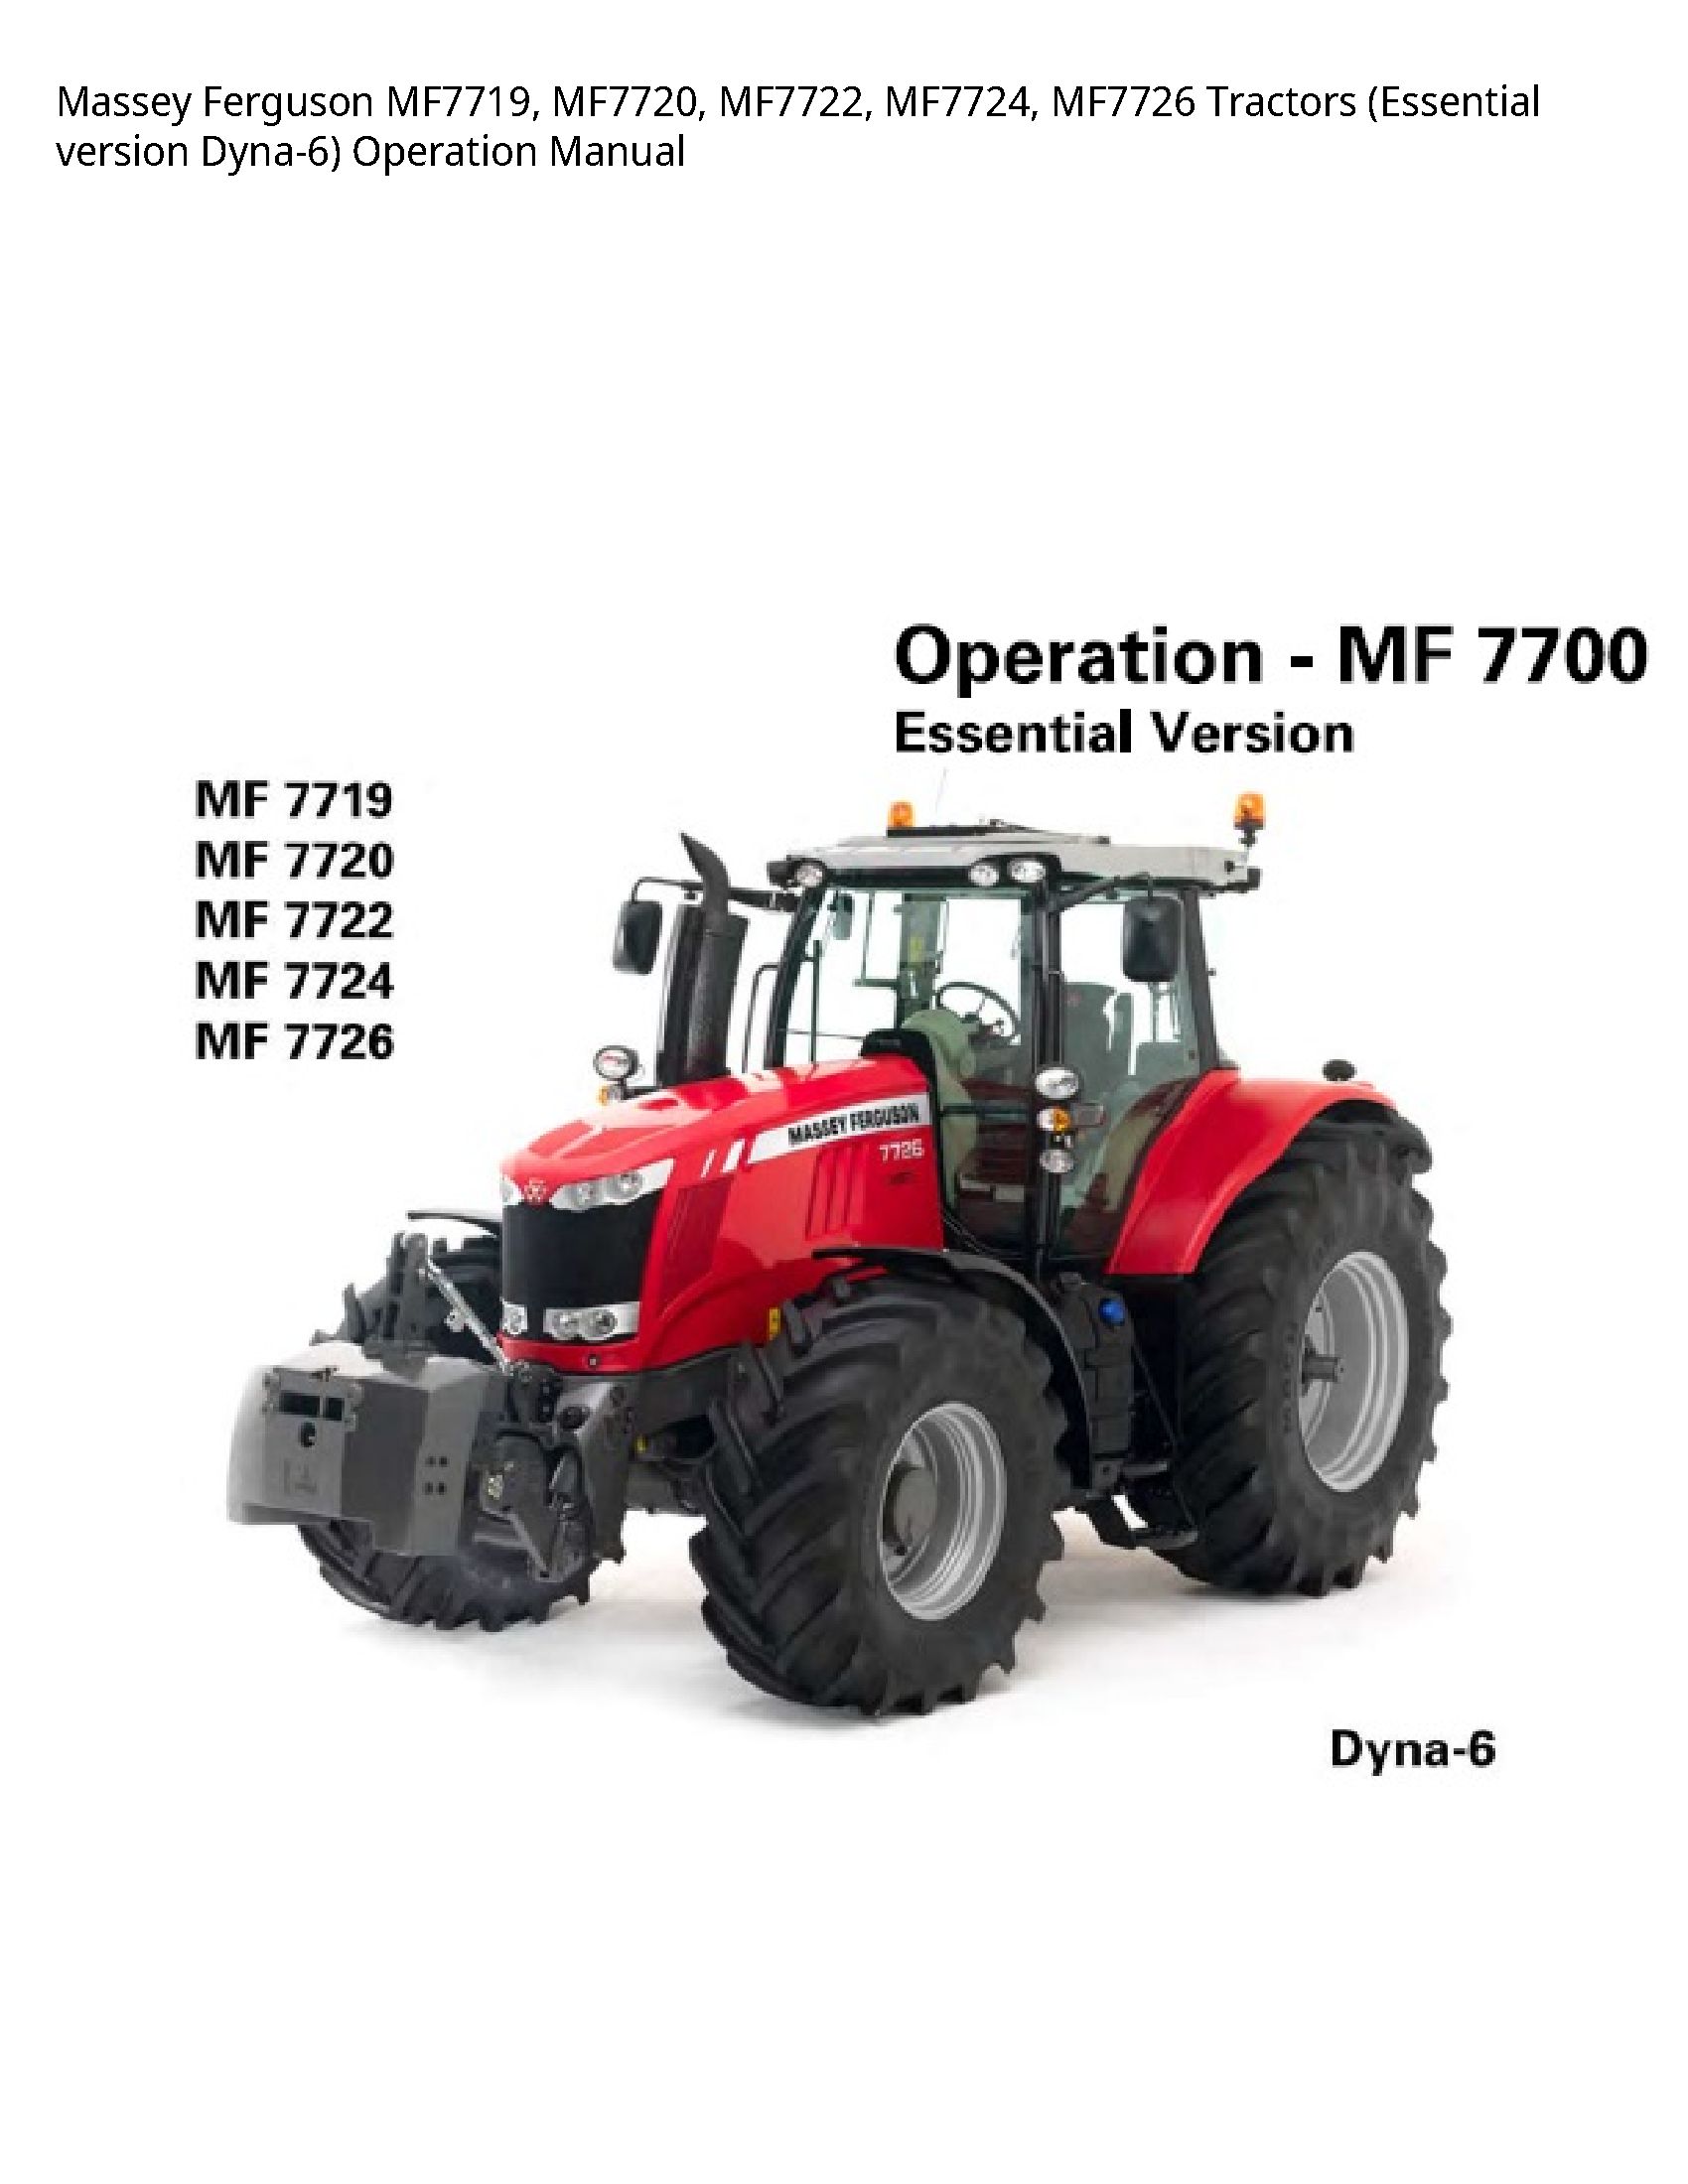 Massey Ferguson MF7719 Tractors (Essential version Operation manual